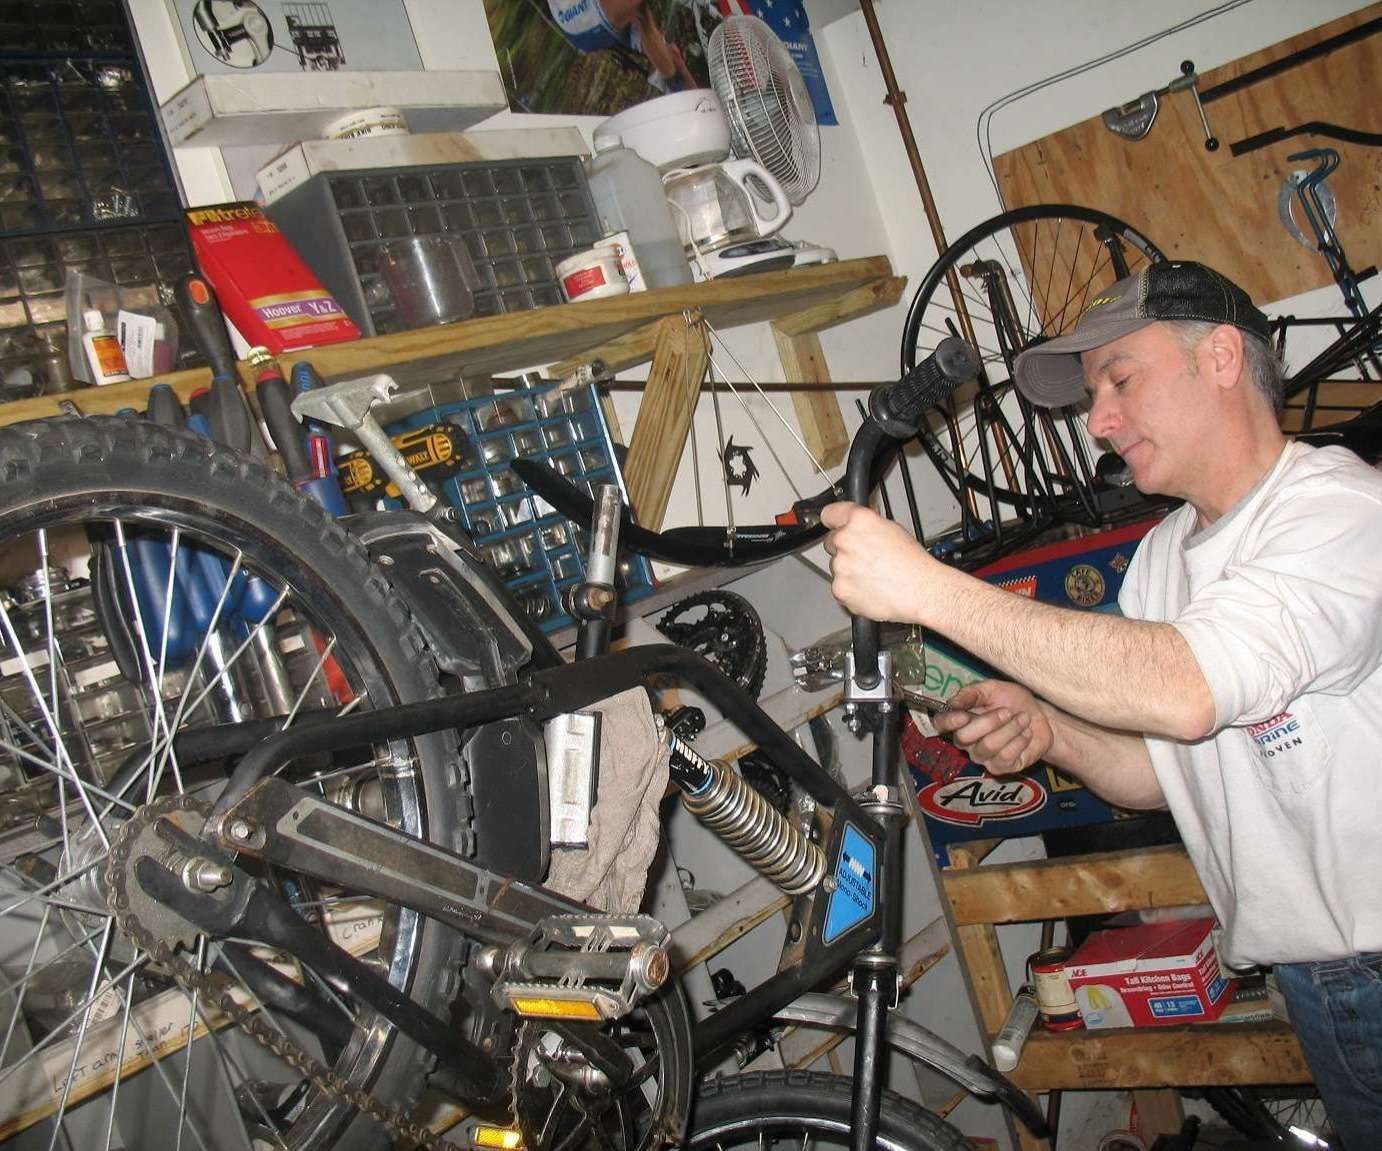 Picture of a bike mechanic working on a bike